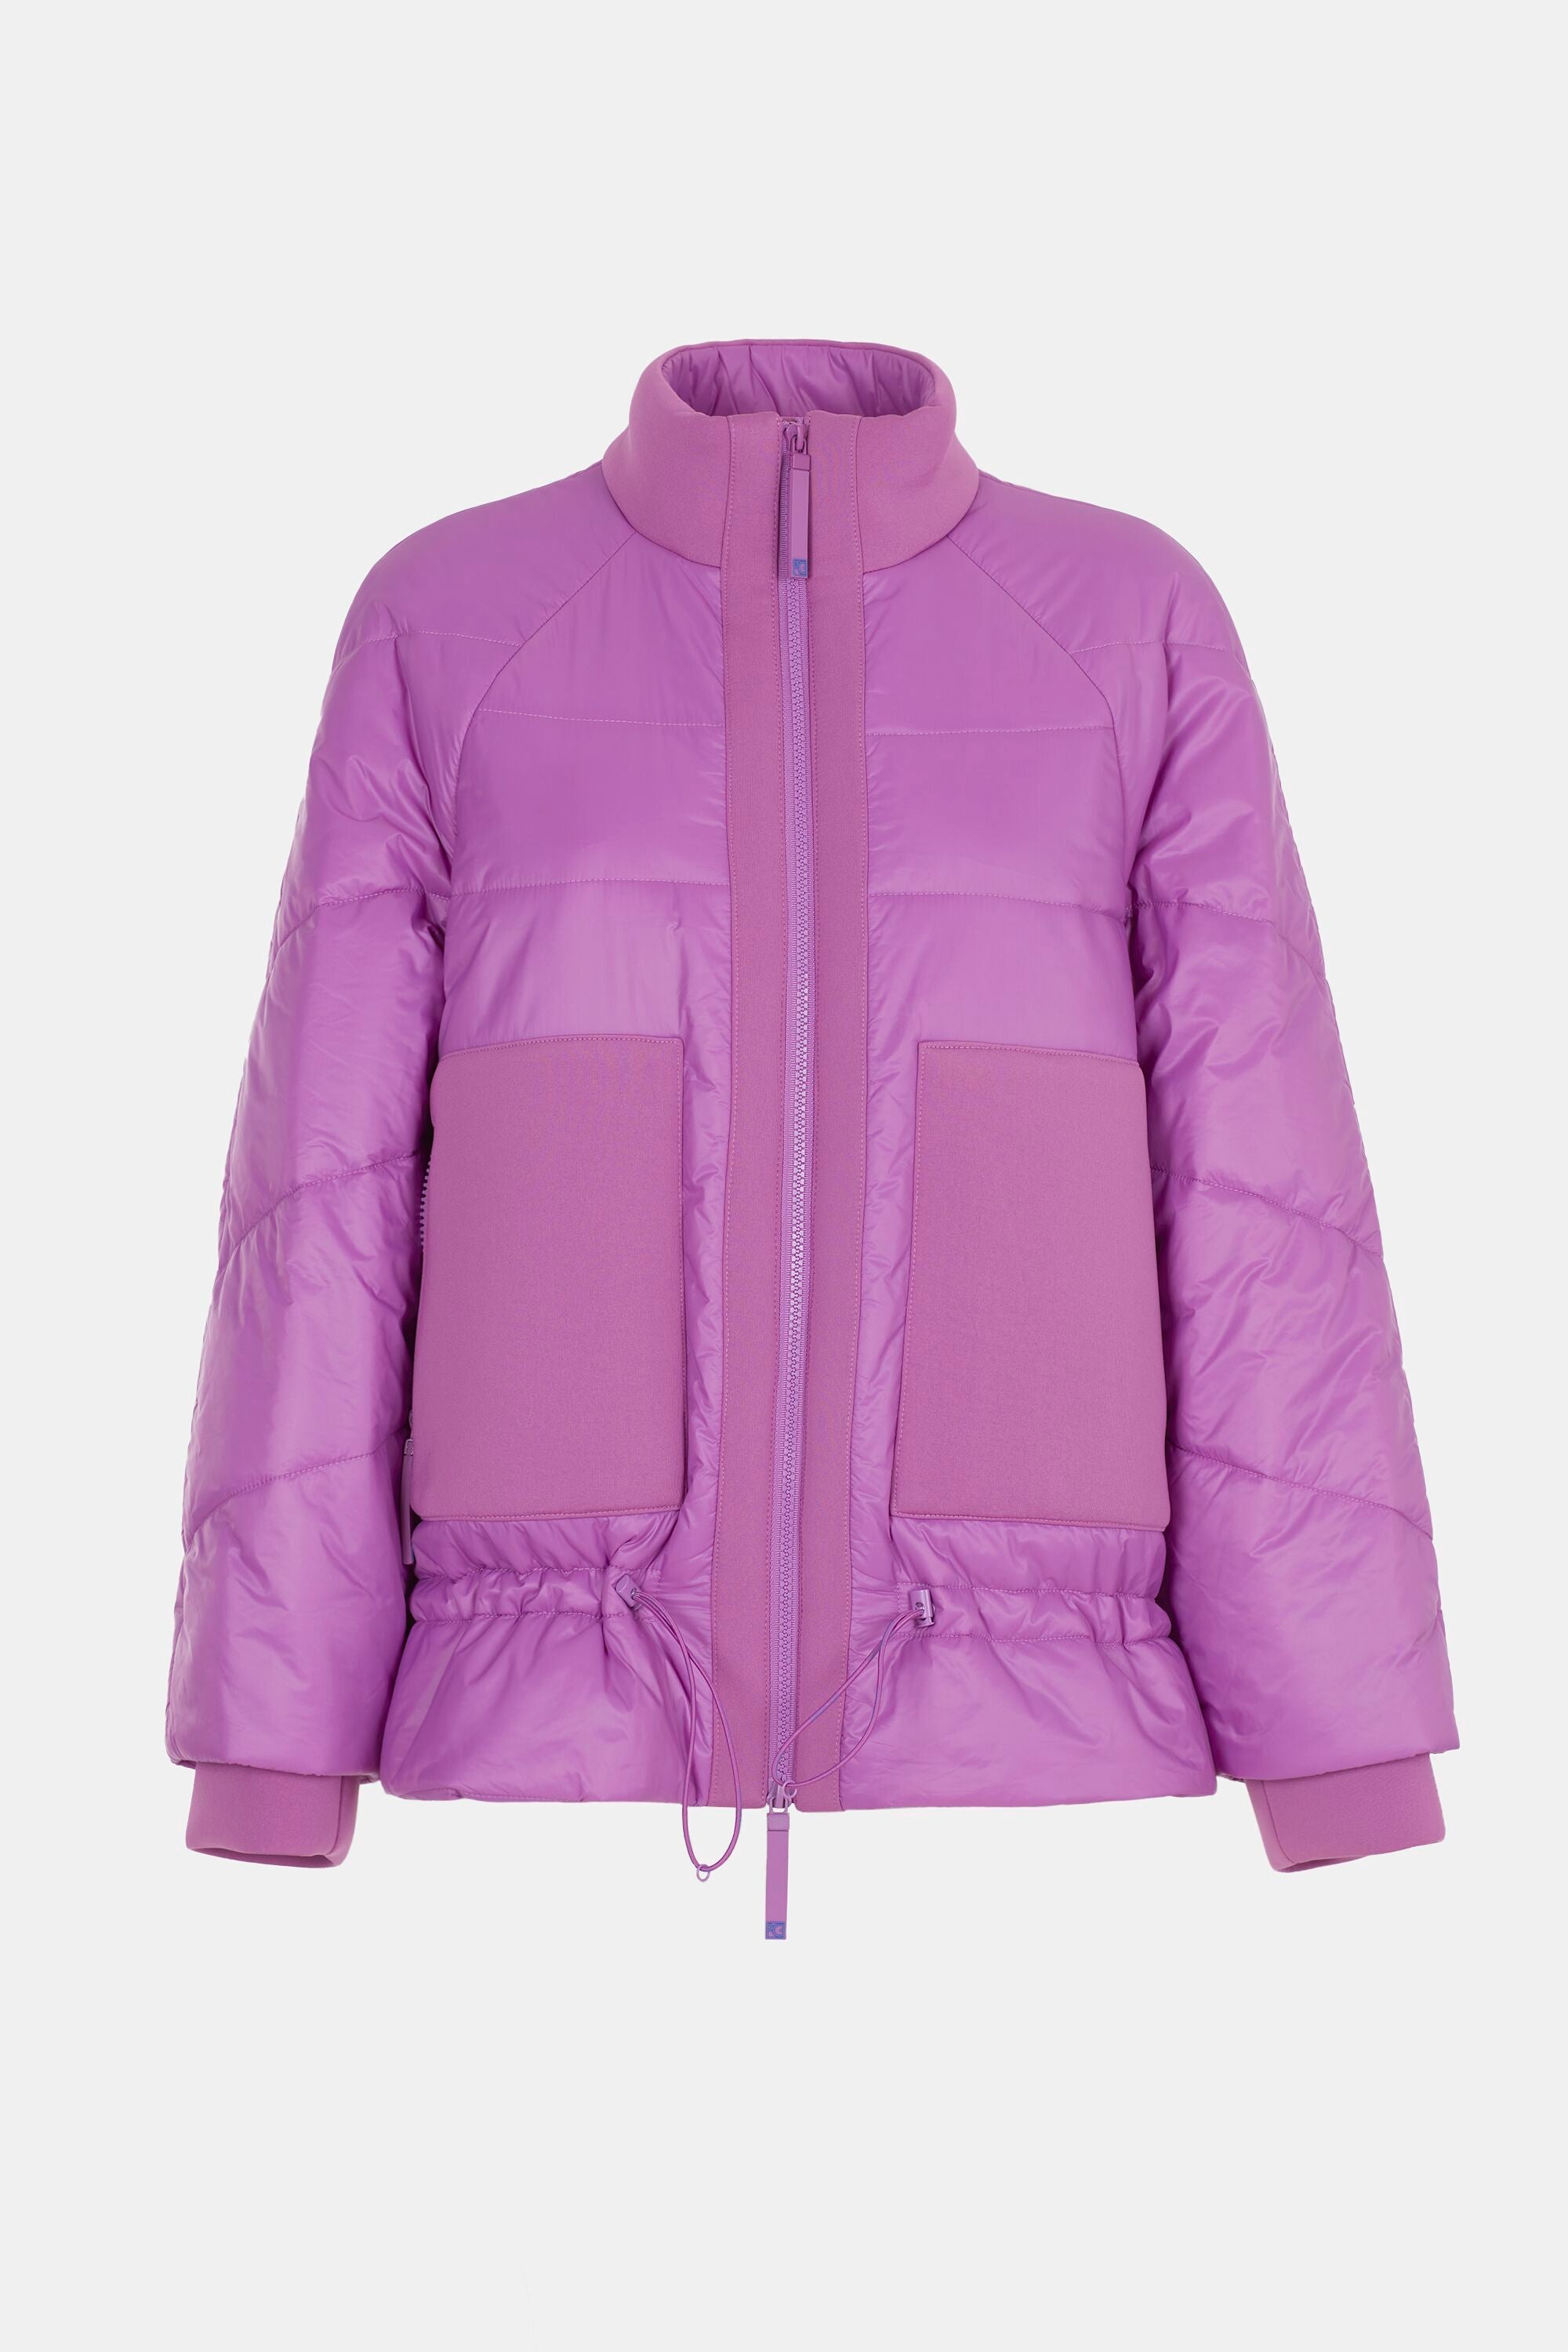 Cocoon neoprene and nylon jacket pink - Purificacion Garcia Belgium